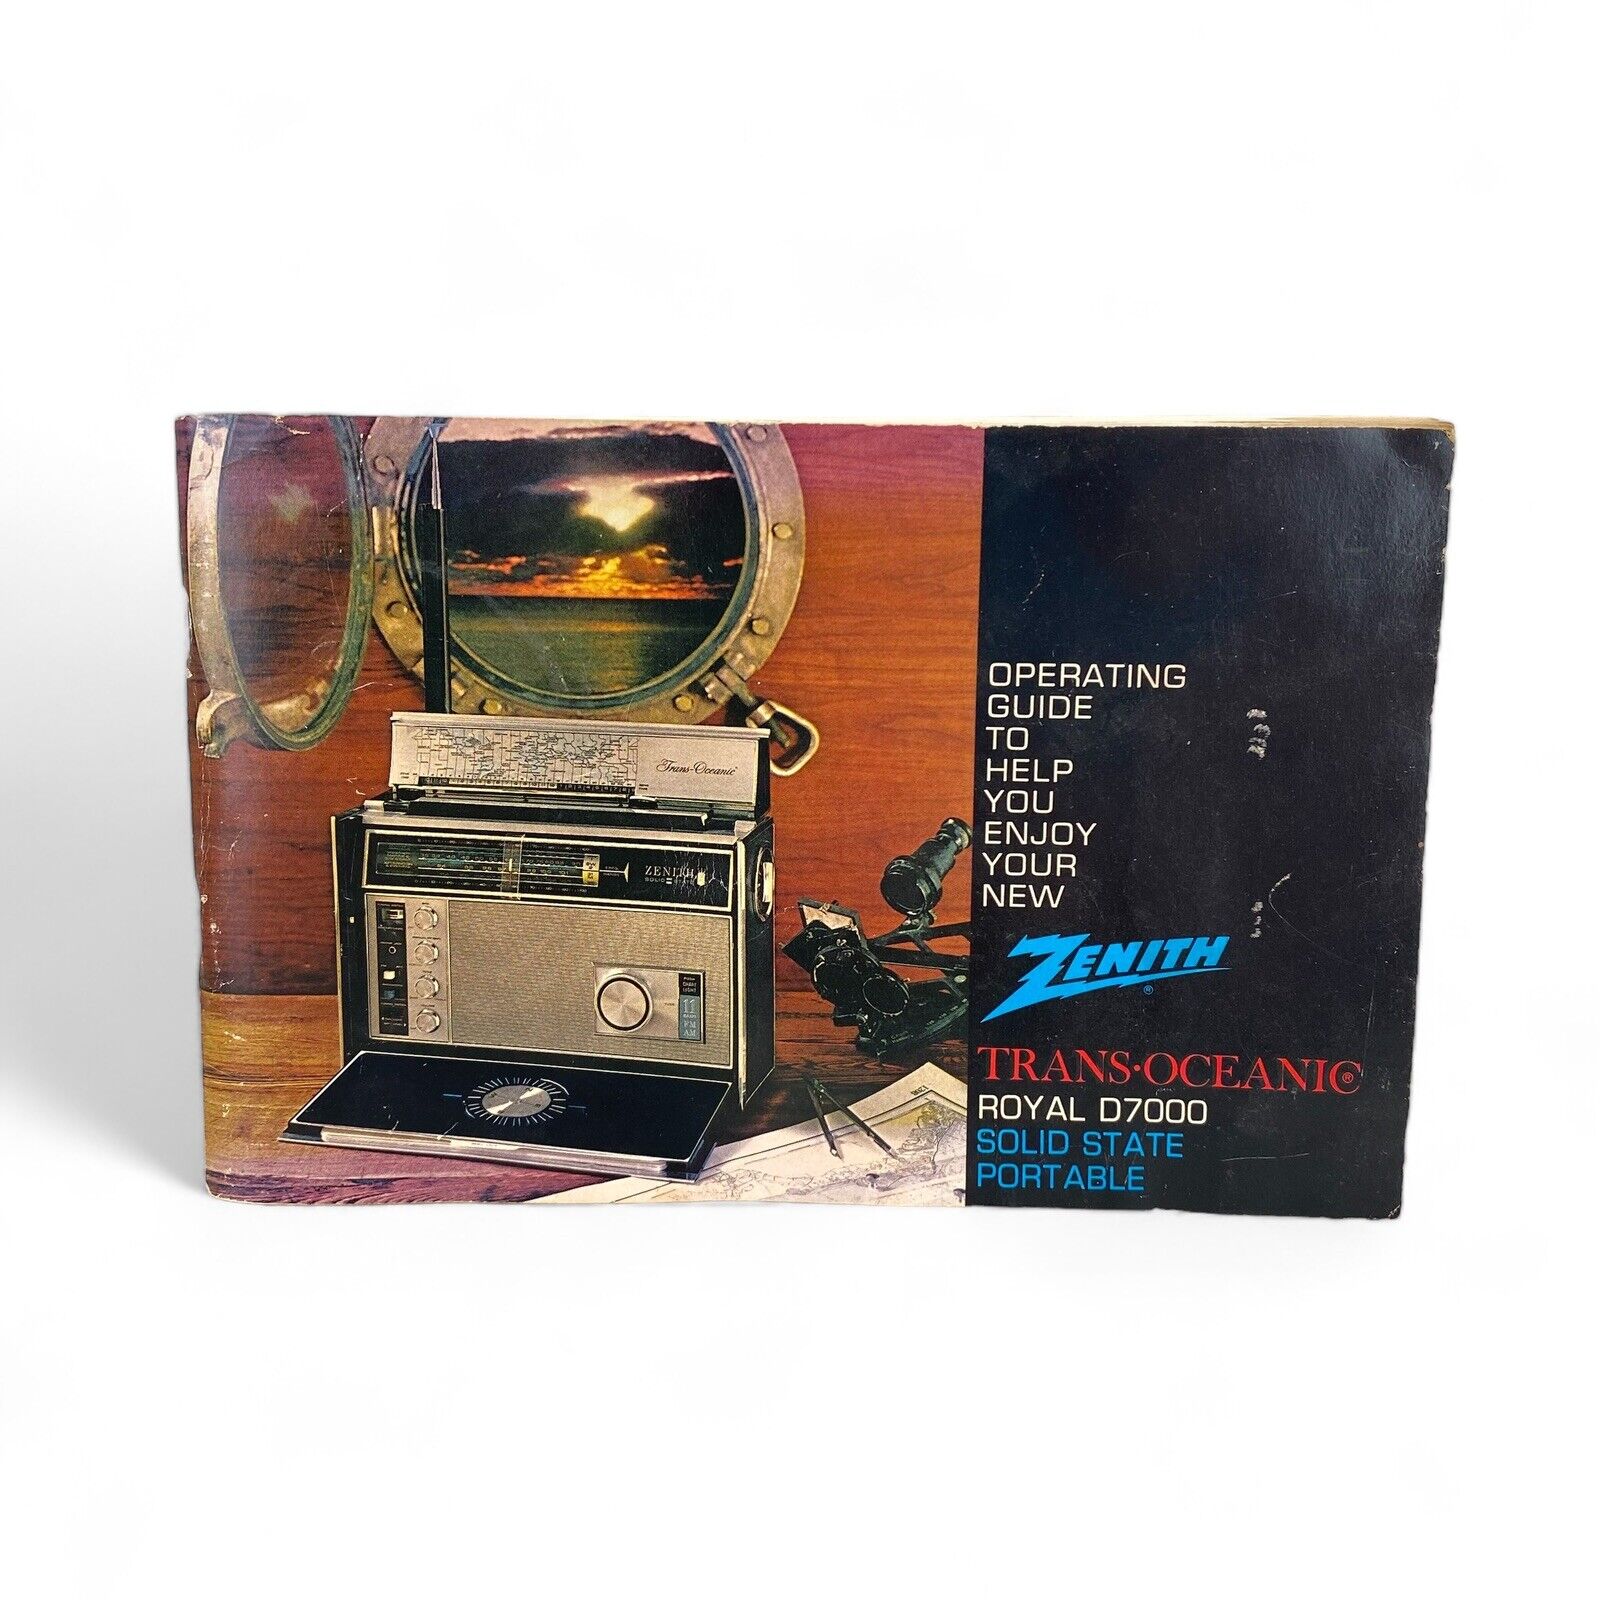 ORIGINAL ZENITH Royal D7000 Trans-Oceanic Portable Receiver Radio Manual